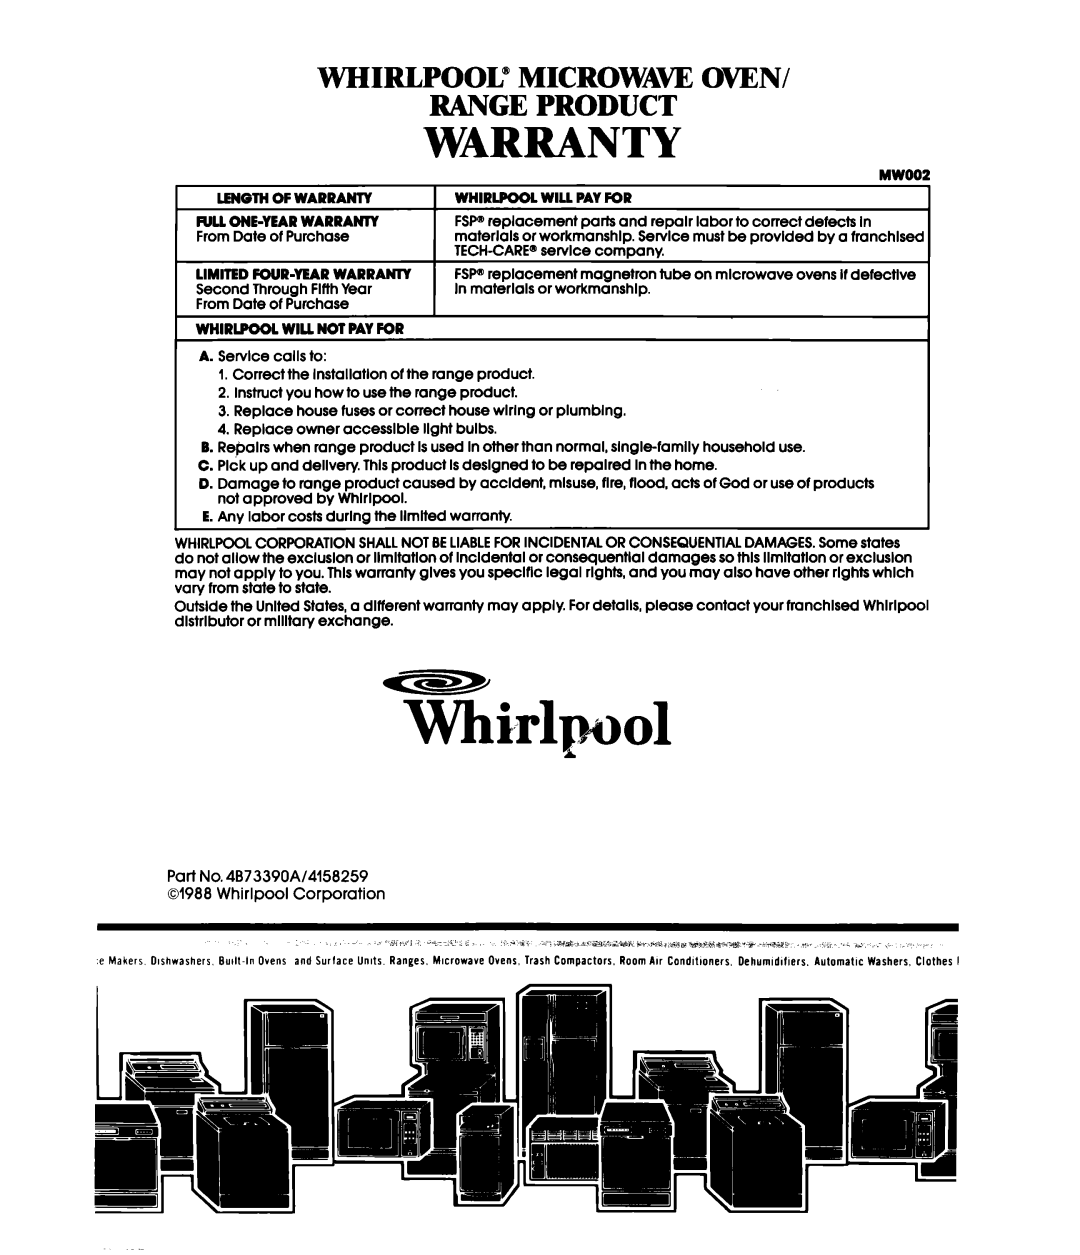 Whirlpool MWIOOOXS manual Warranty, Whirlpool@, Microwaw, Oven, Range Product 